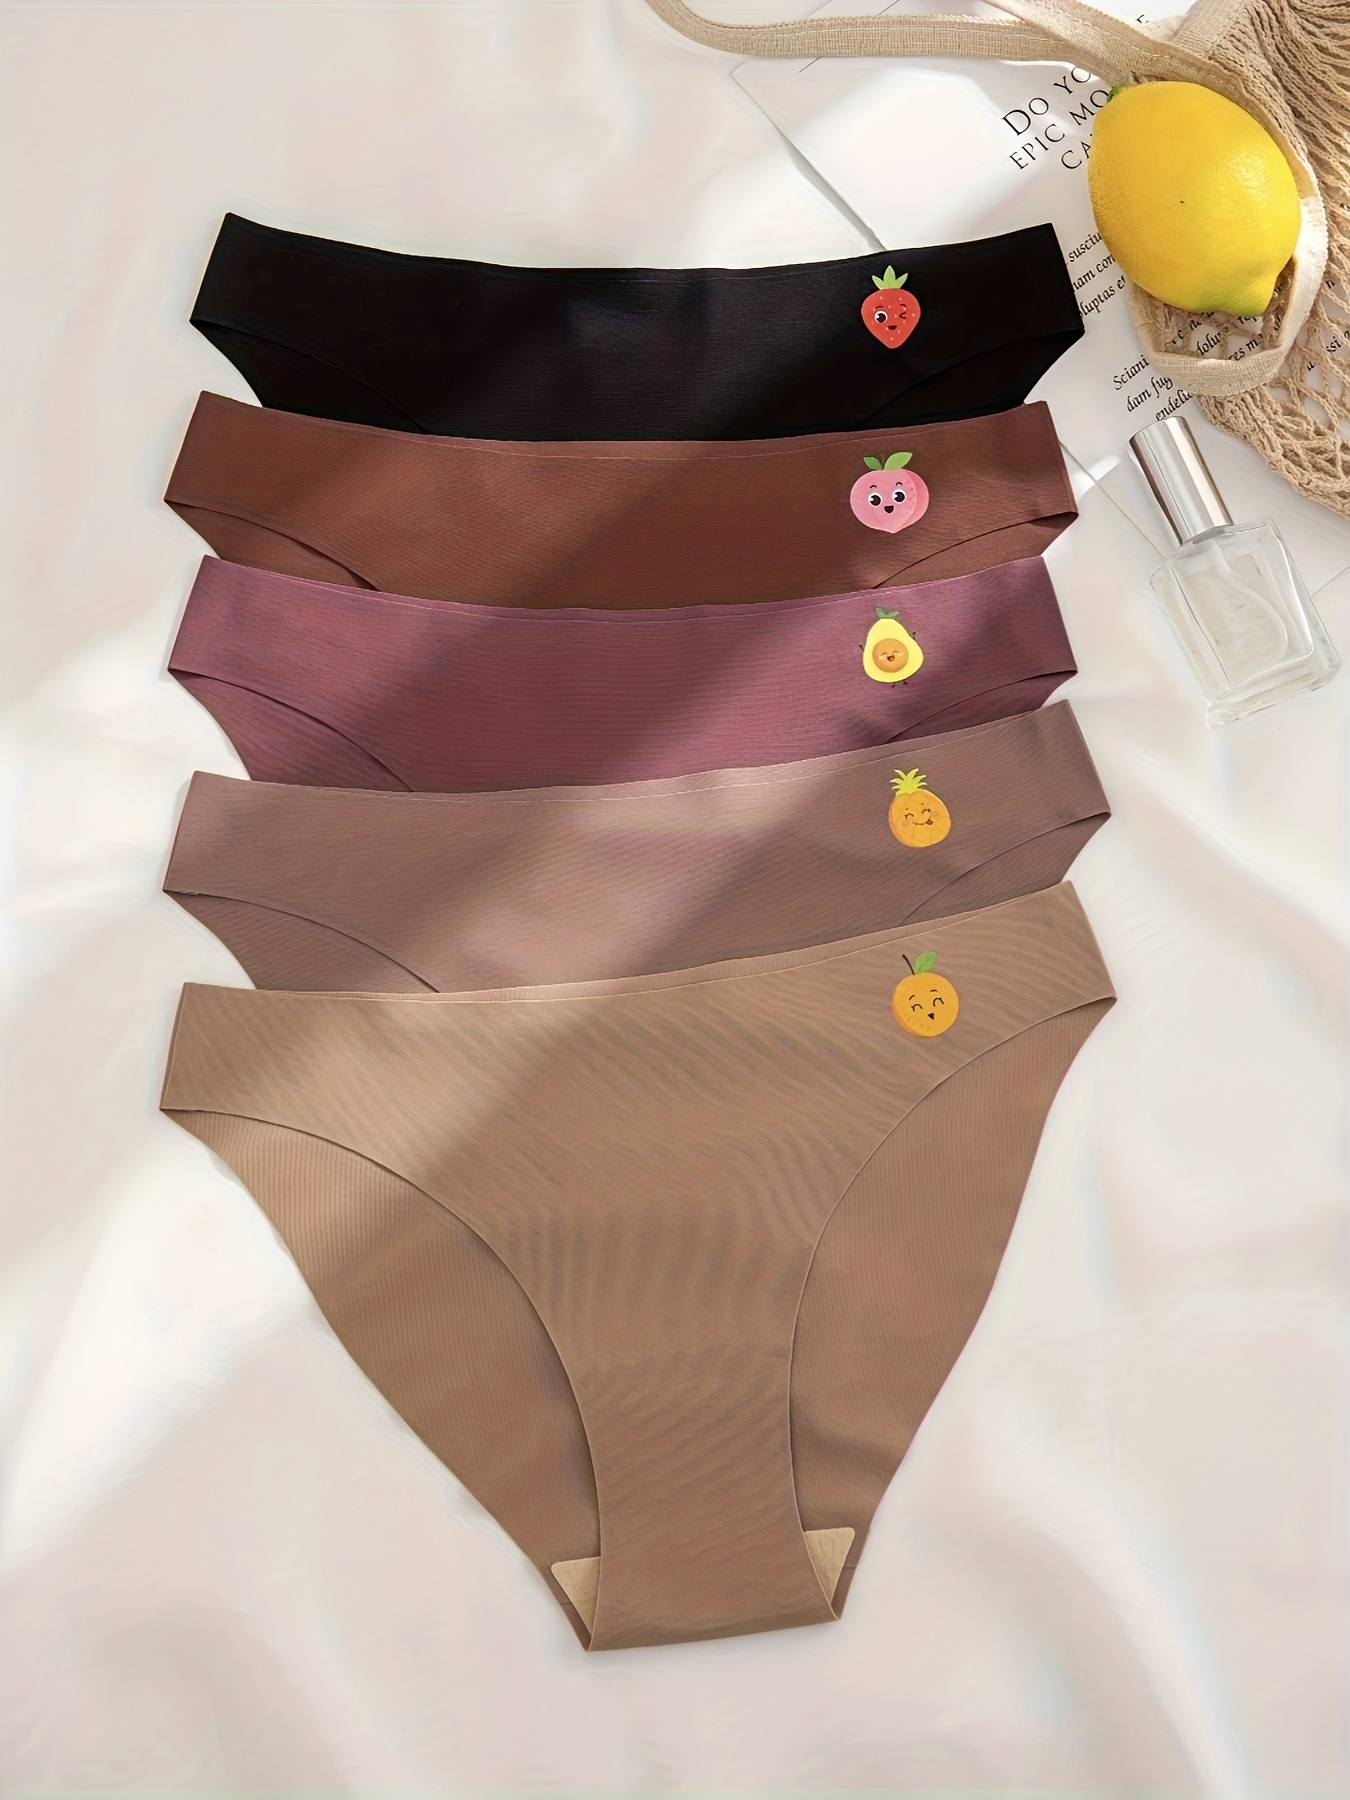 Buy Fruit of the Loom Girls Underwear, 12 Pack, Seamless Underwear